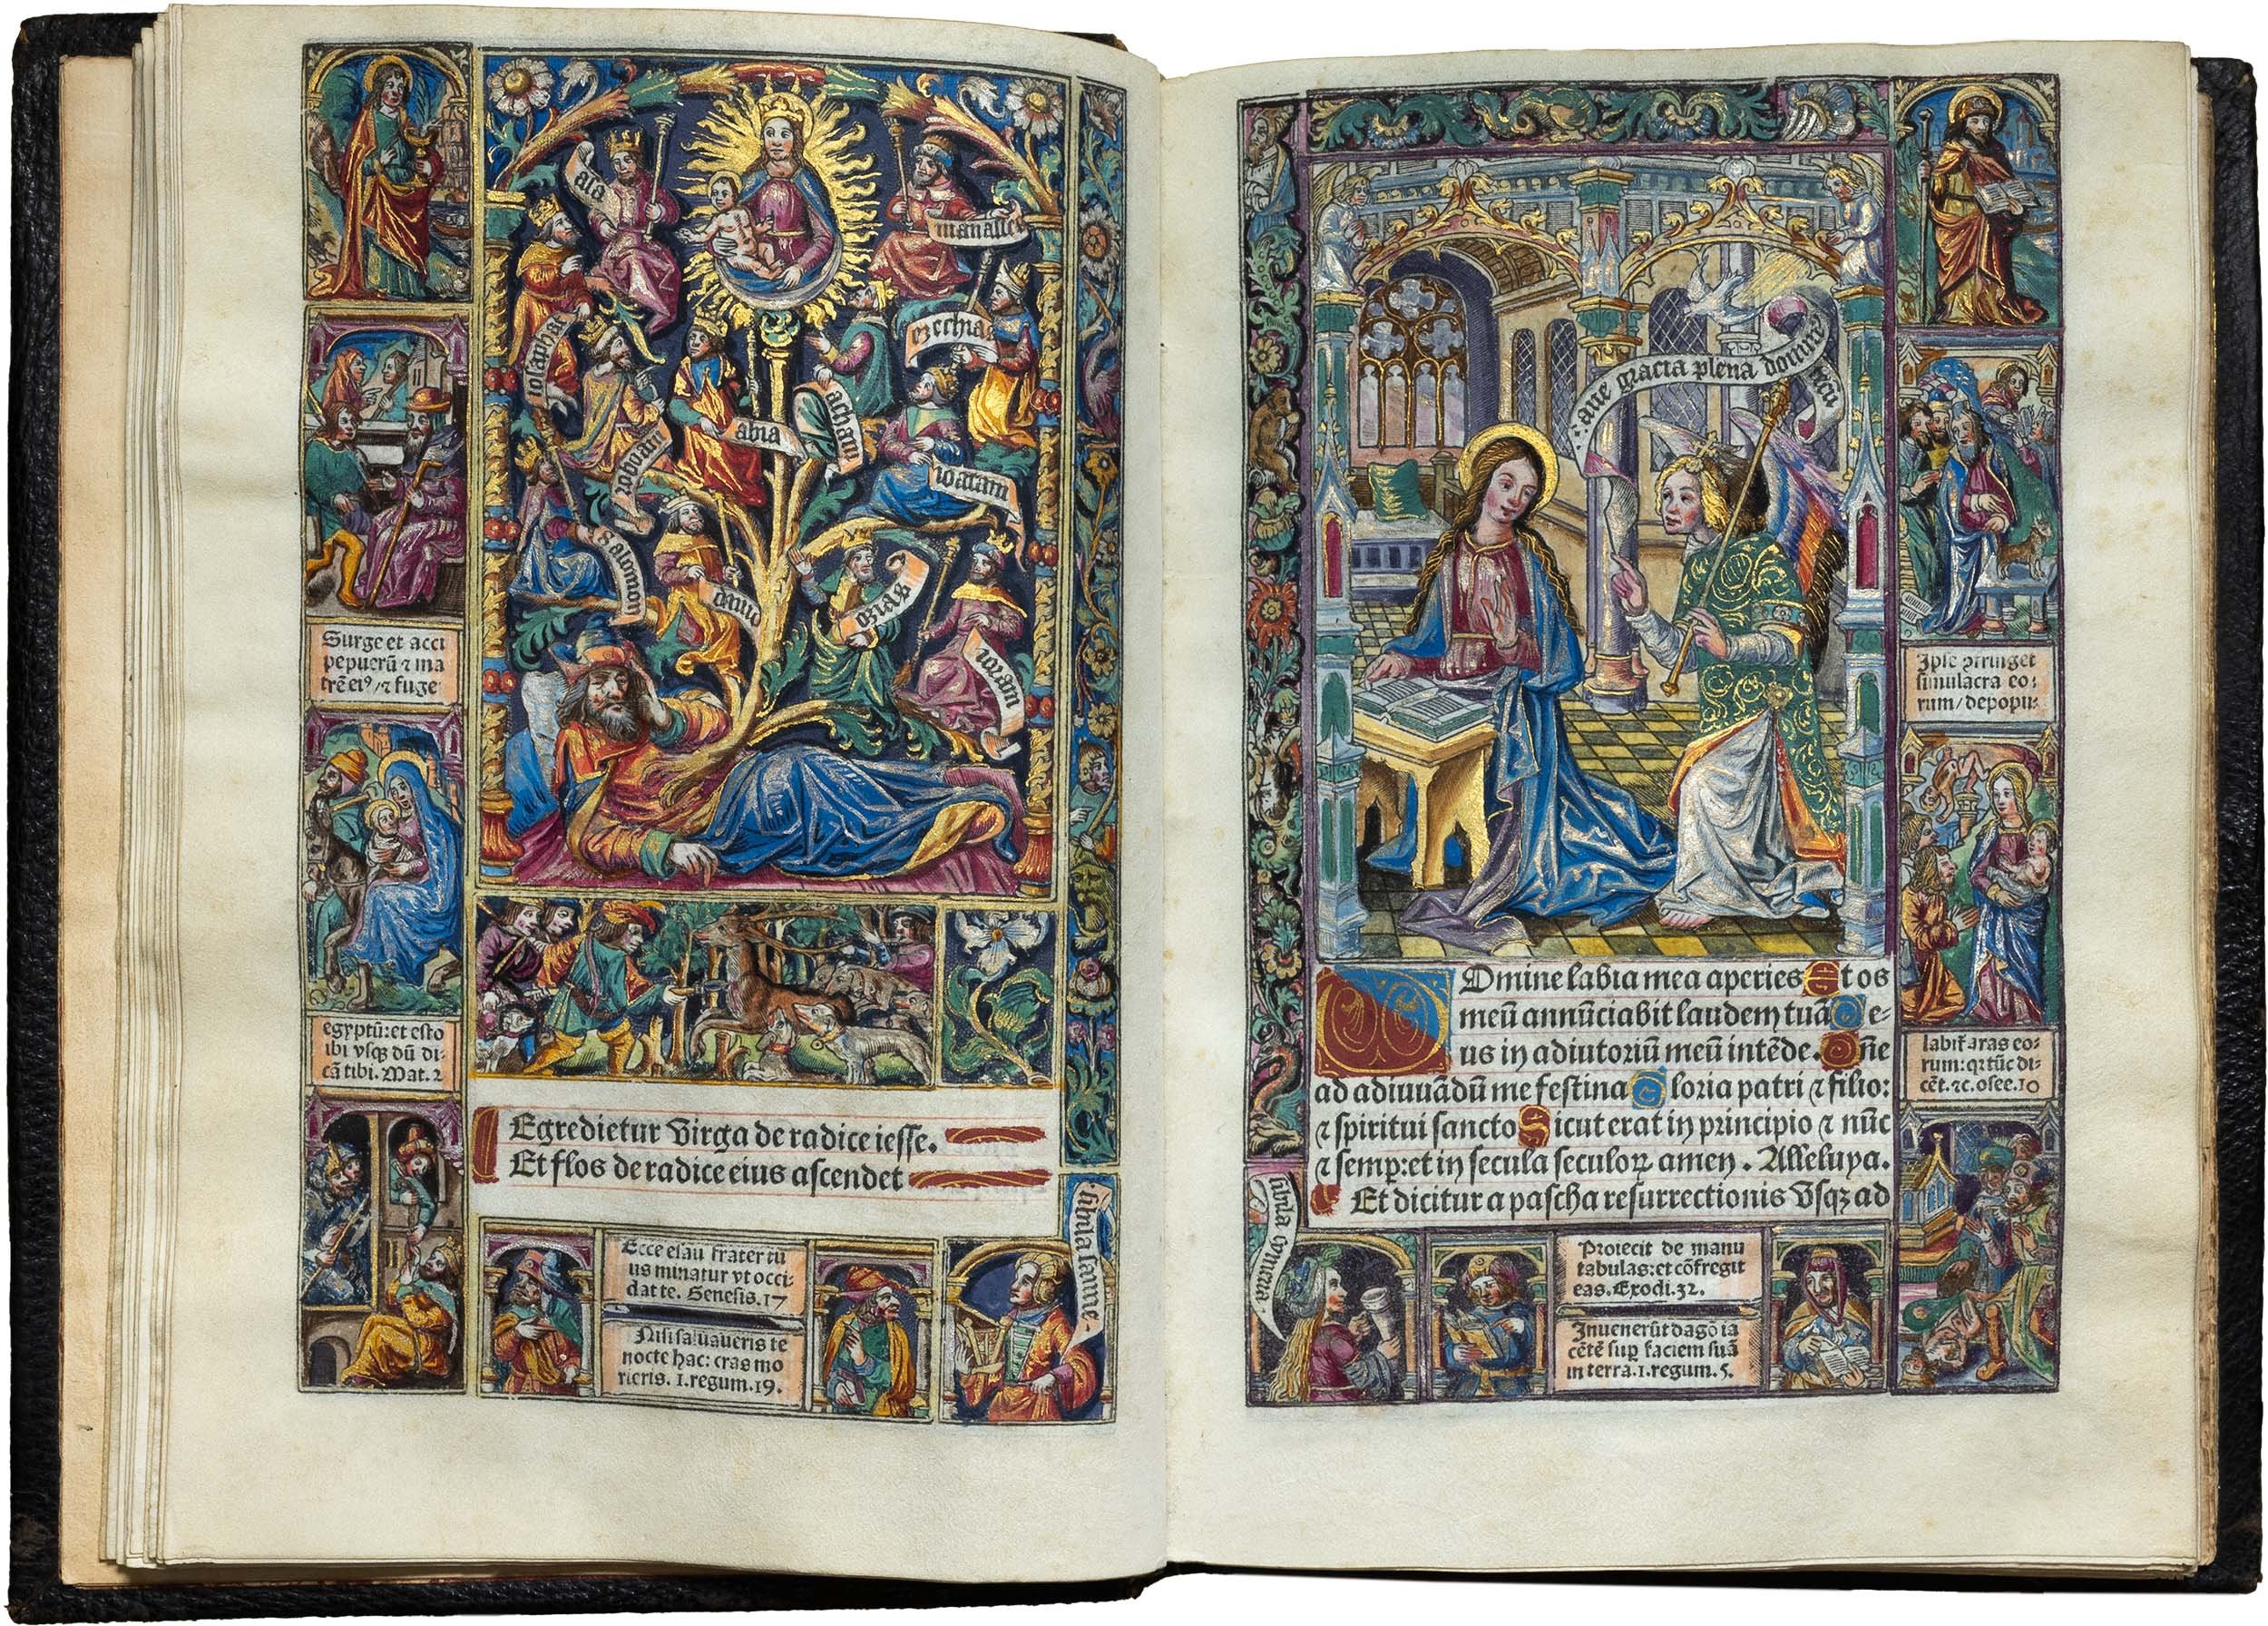 Printed-Book-of-Hours-10-january-1503-horae-bmv-kerver-remacle-illuminated-vellum-copy-schönborn-buchheim-19.jpg